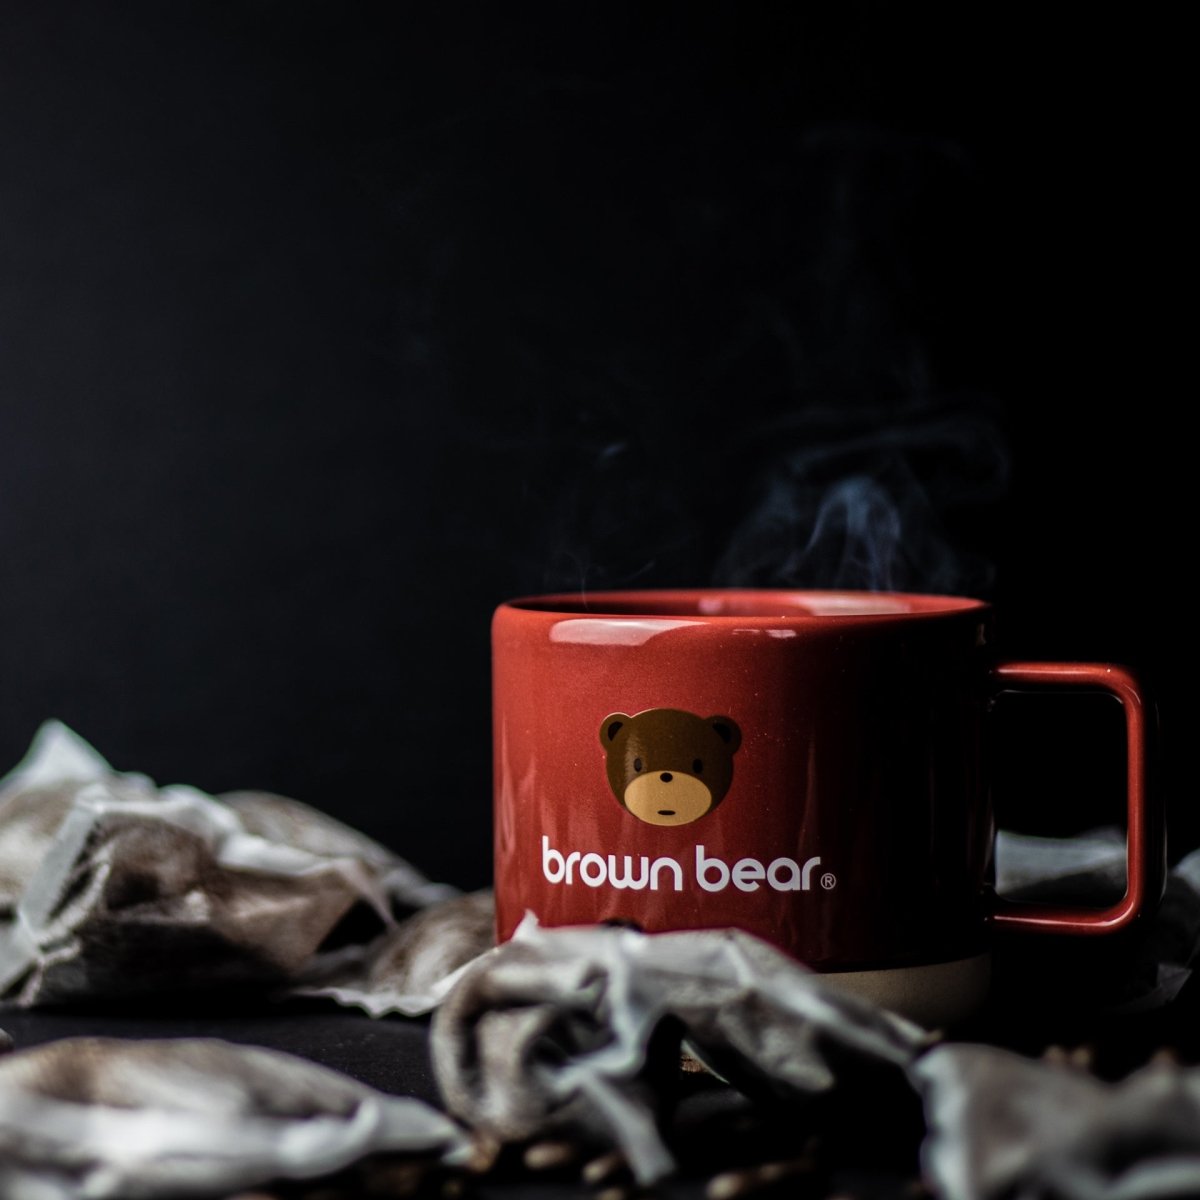 Outsider Coffee Mug - The Perfect Travel Mug - The AM (Black) – Outsider.com